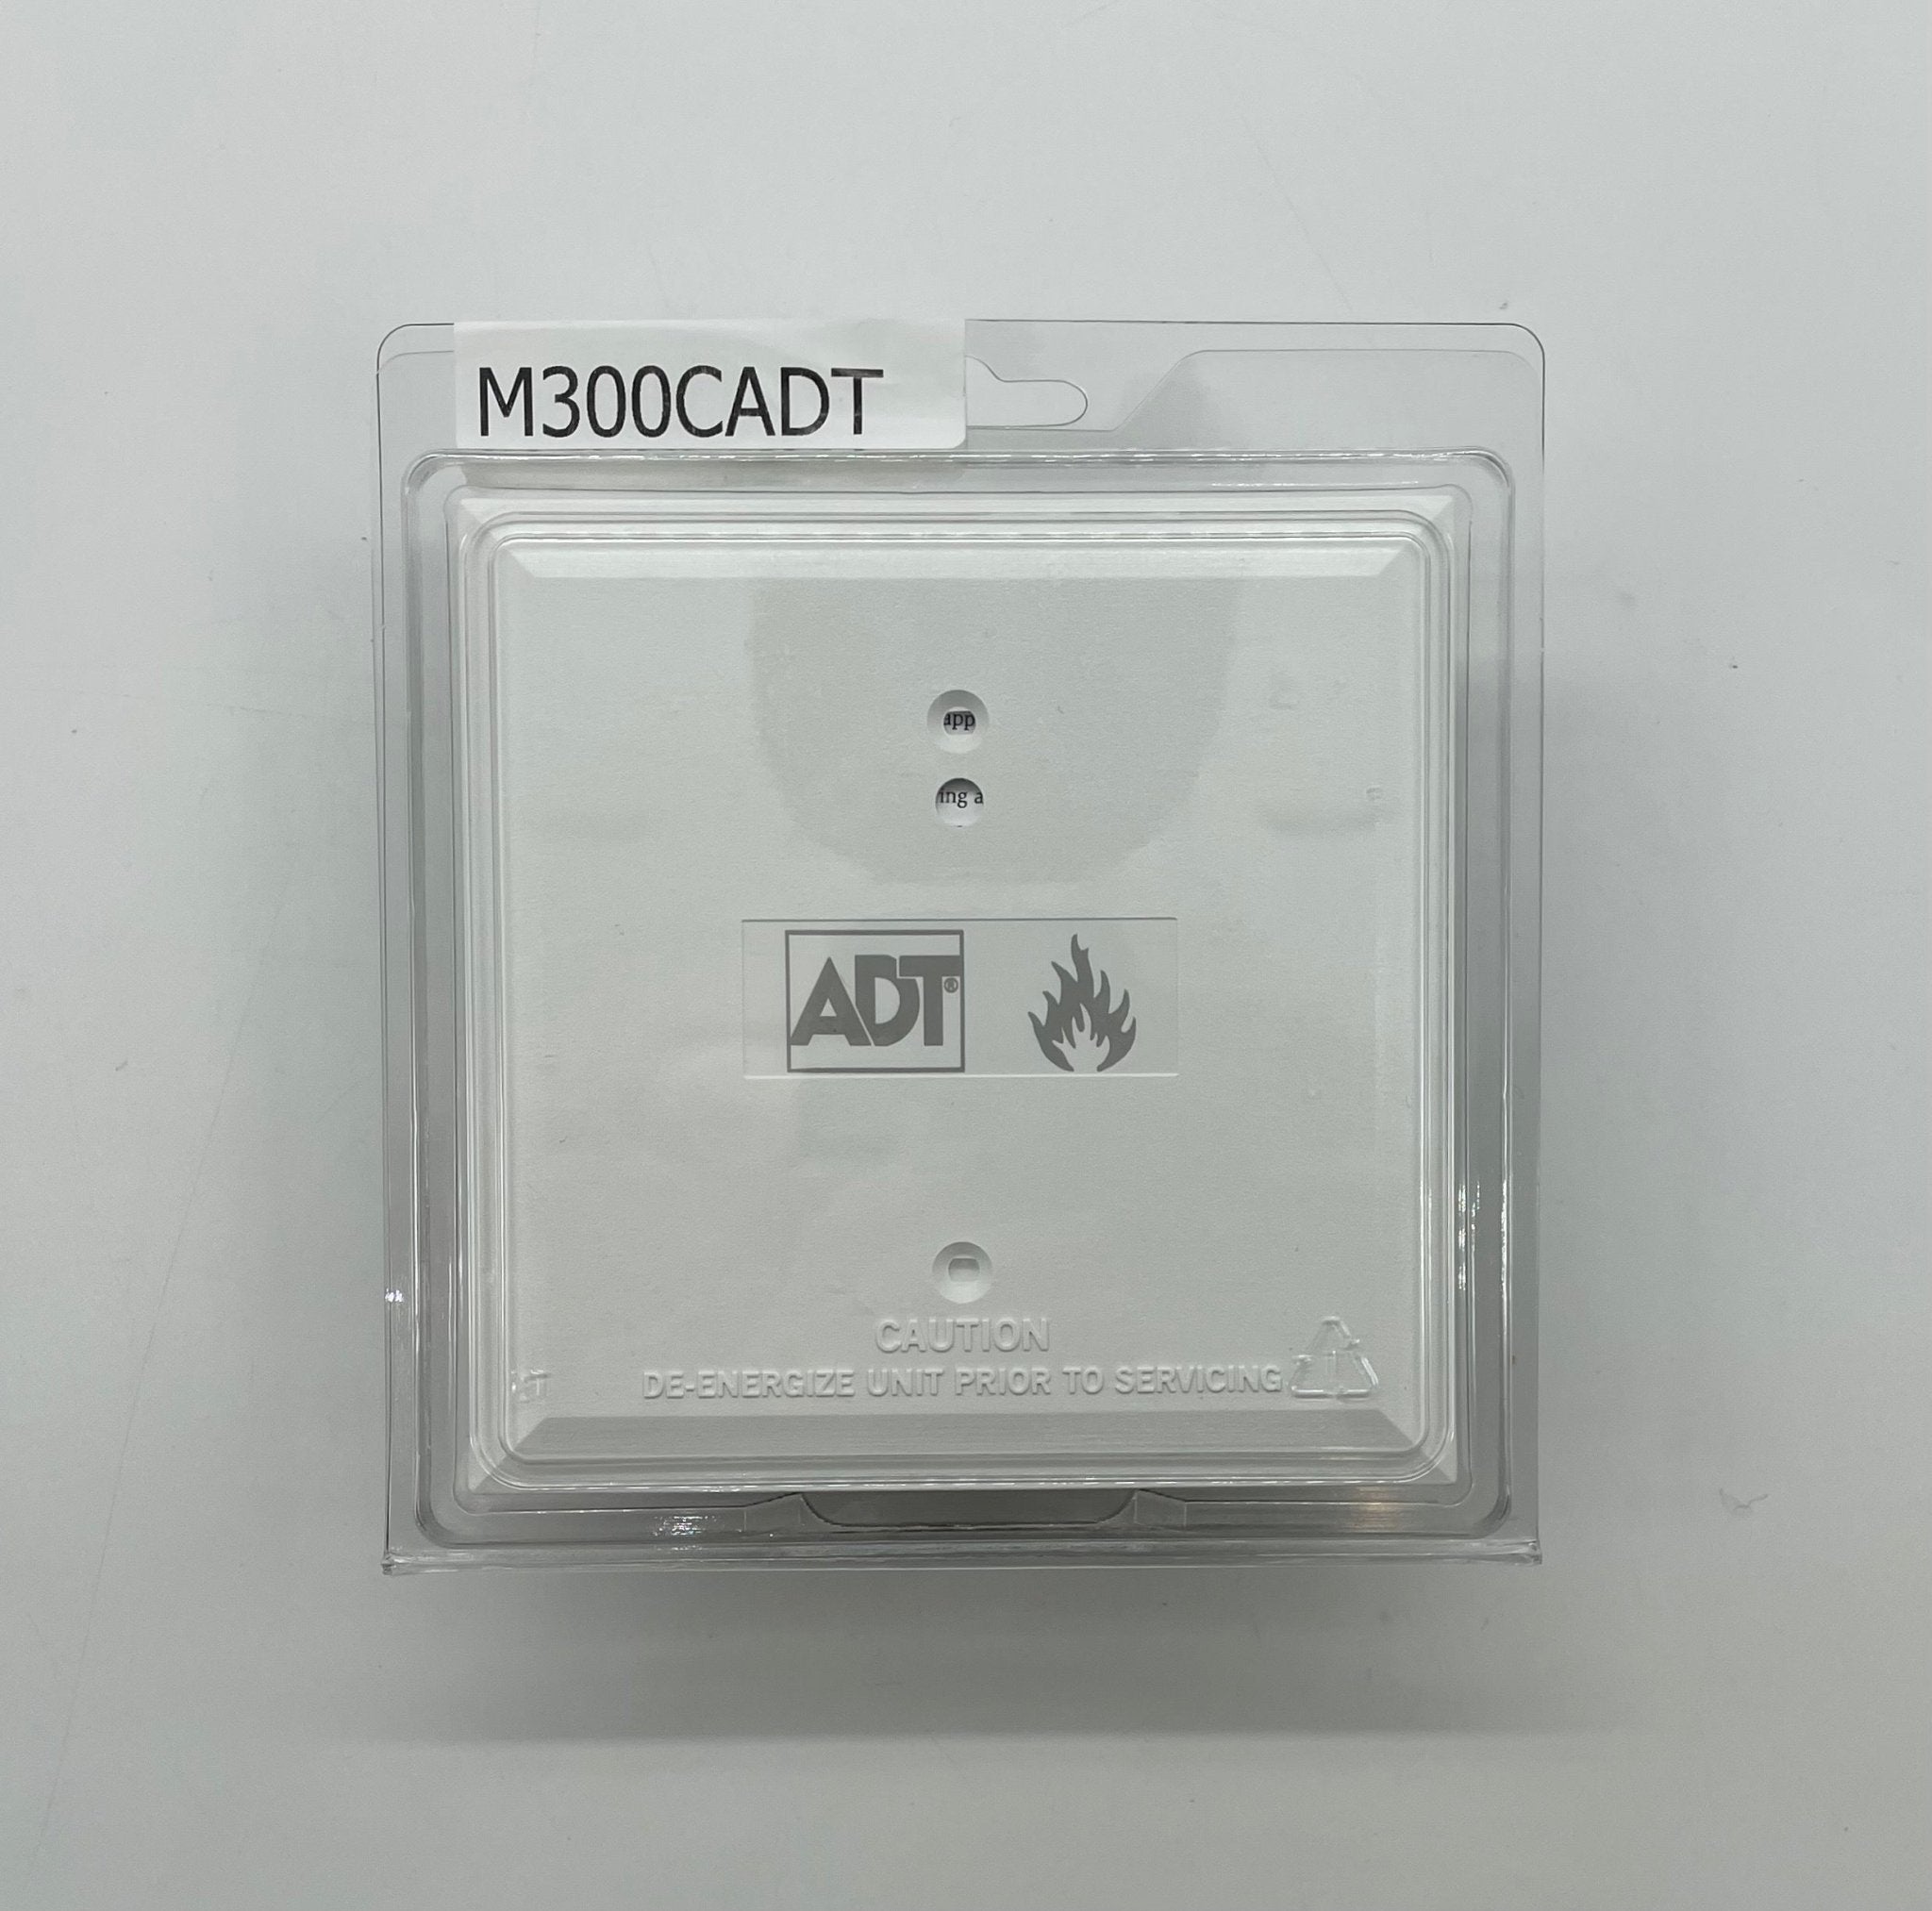 ADT M300CADT - The Fire Alarm Supplier